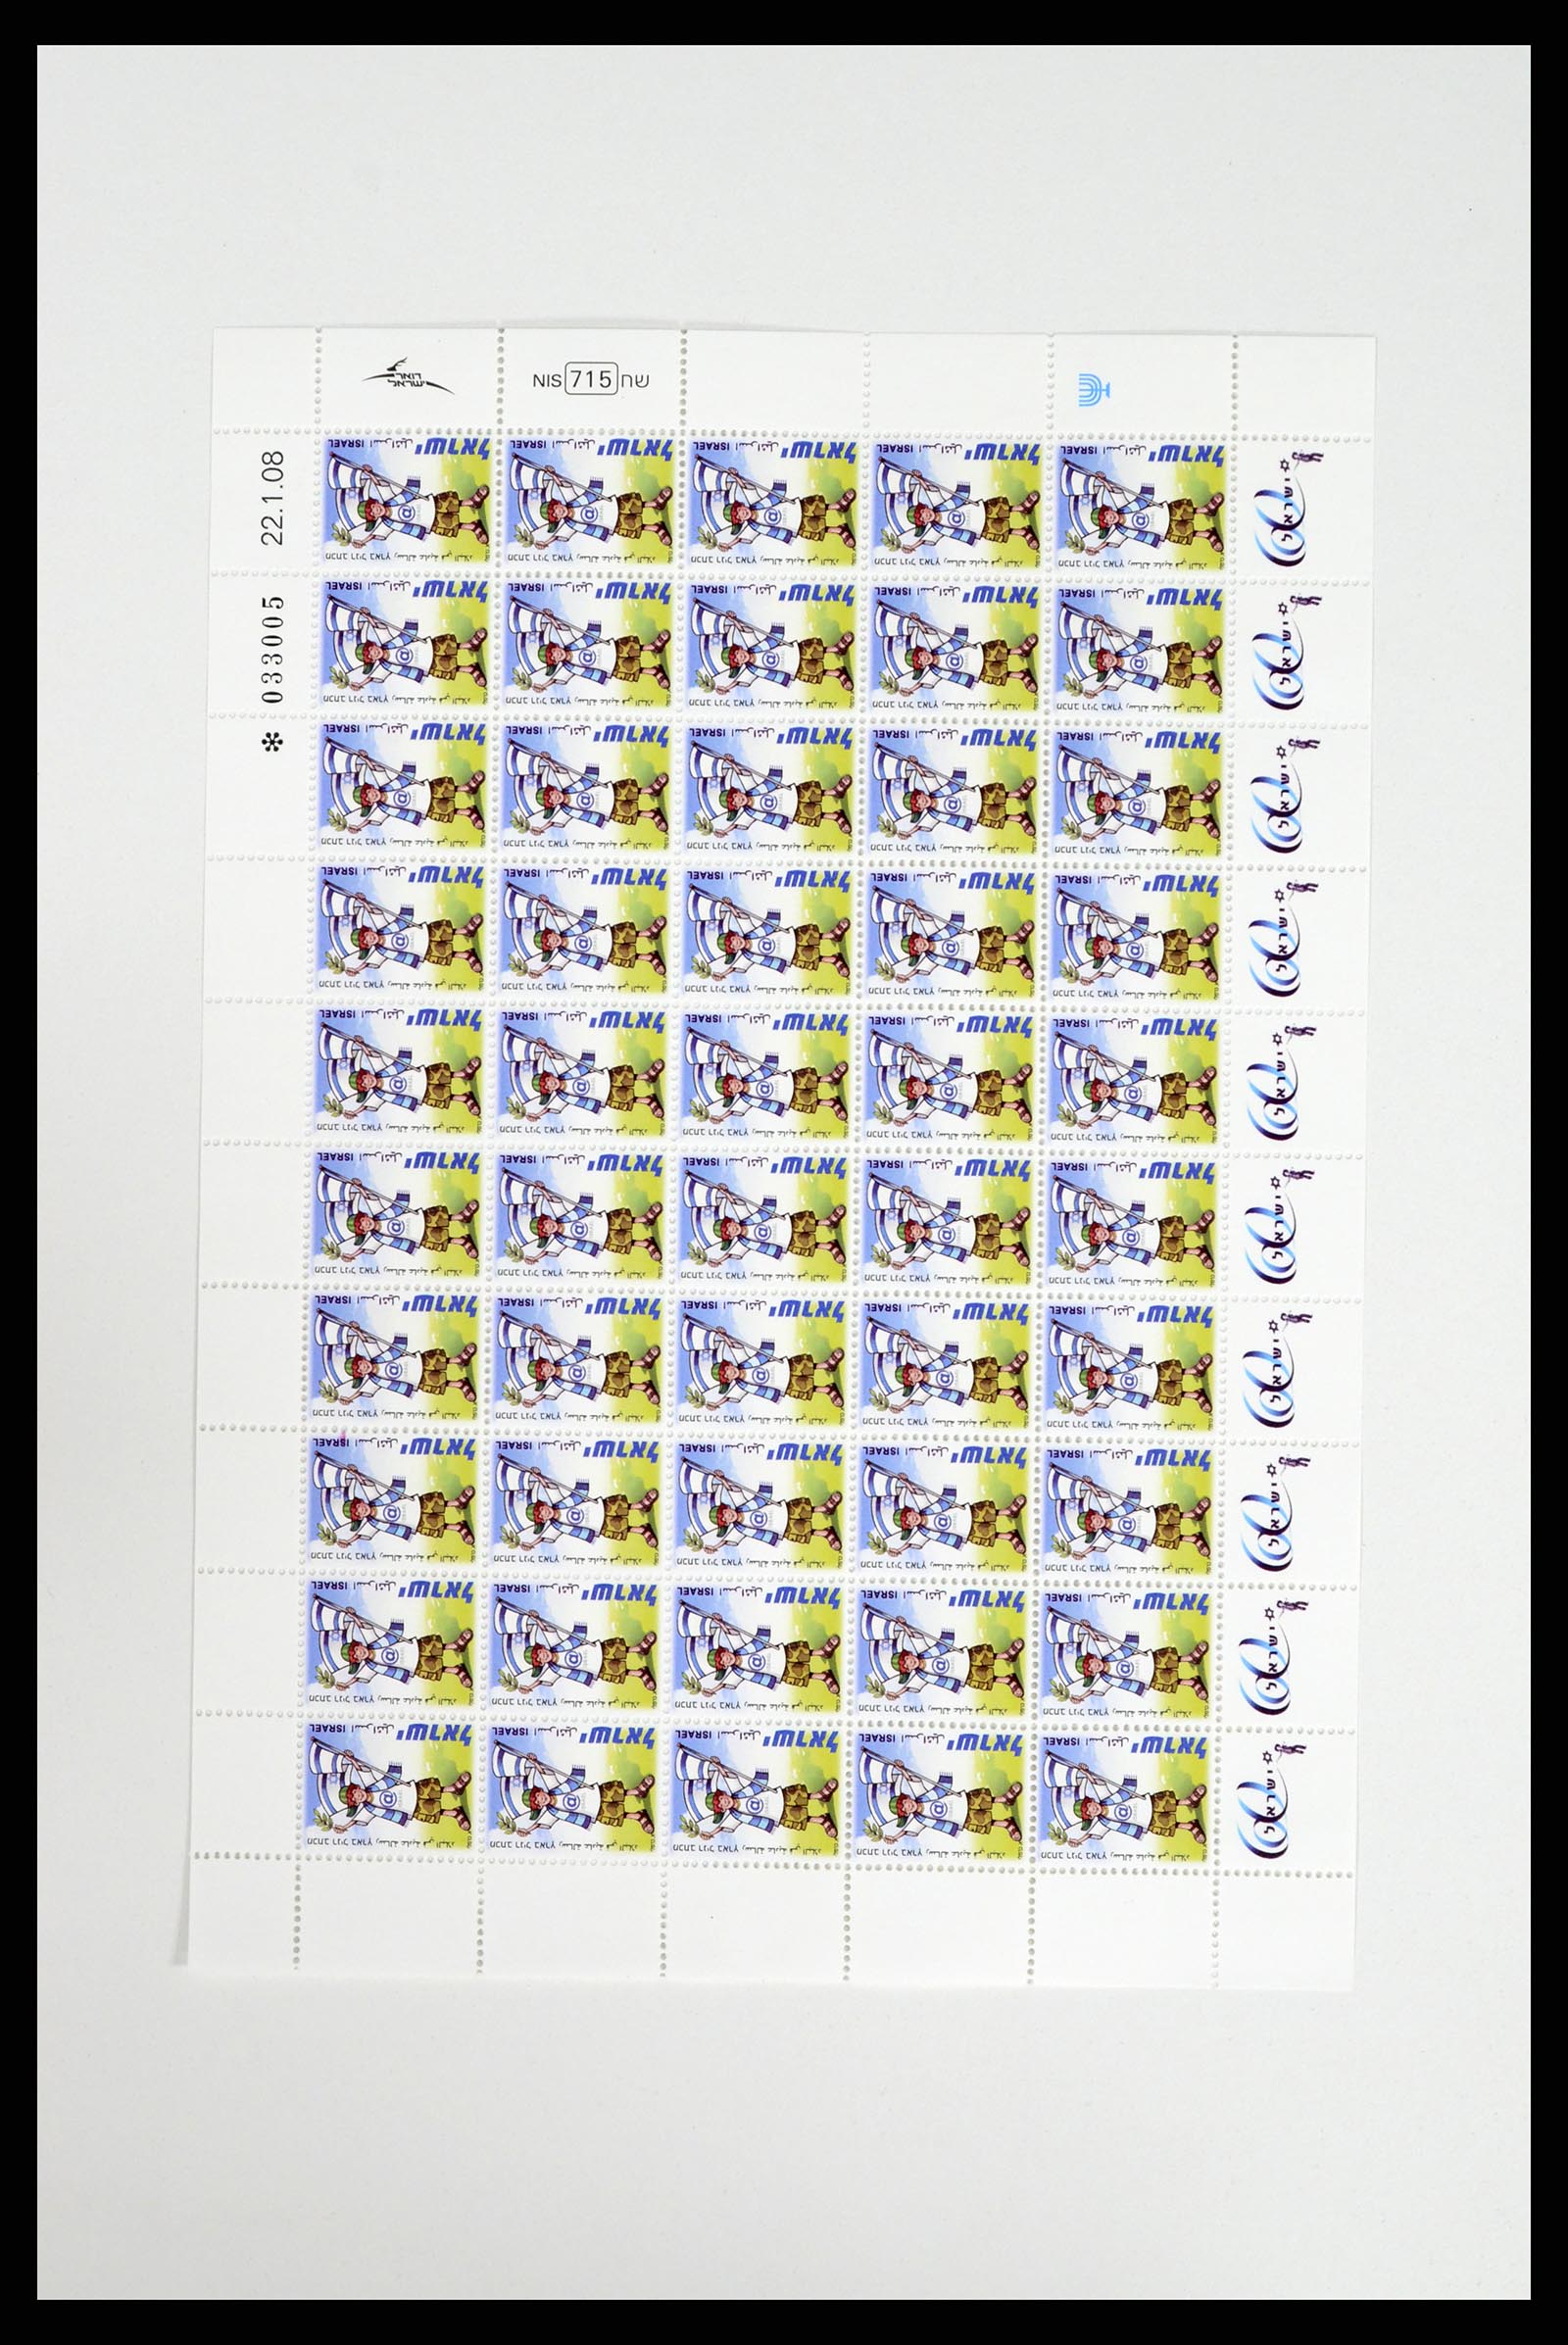 37779 093 - Stamp collection 37779 Israel sheetlets 1986-2009.